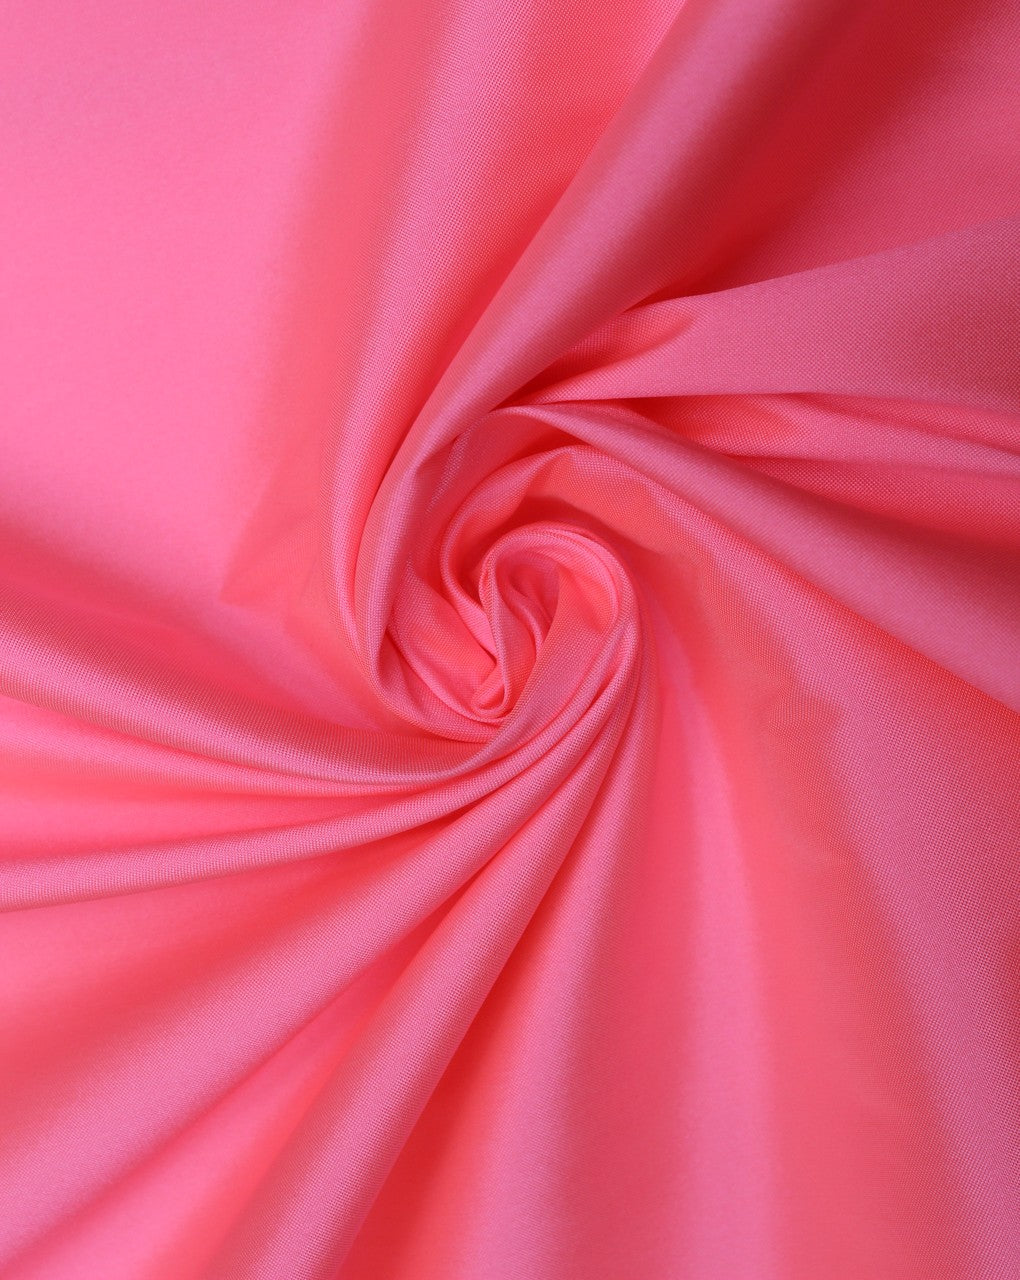 Plain Hot Pink Polyester Taffeta Fabric